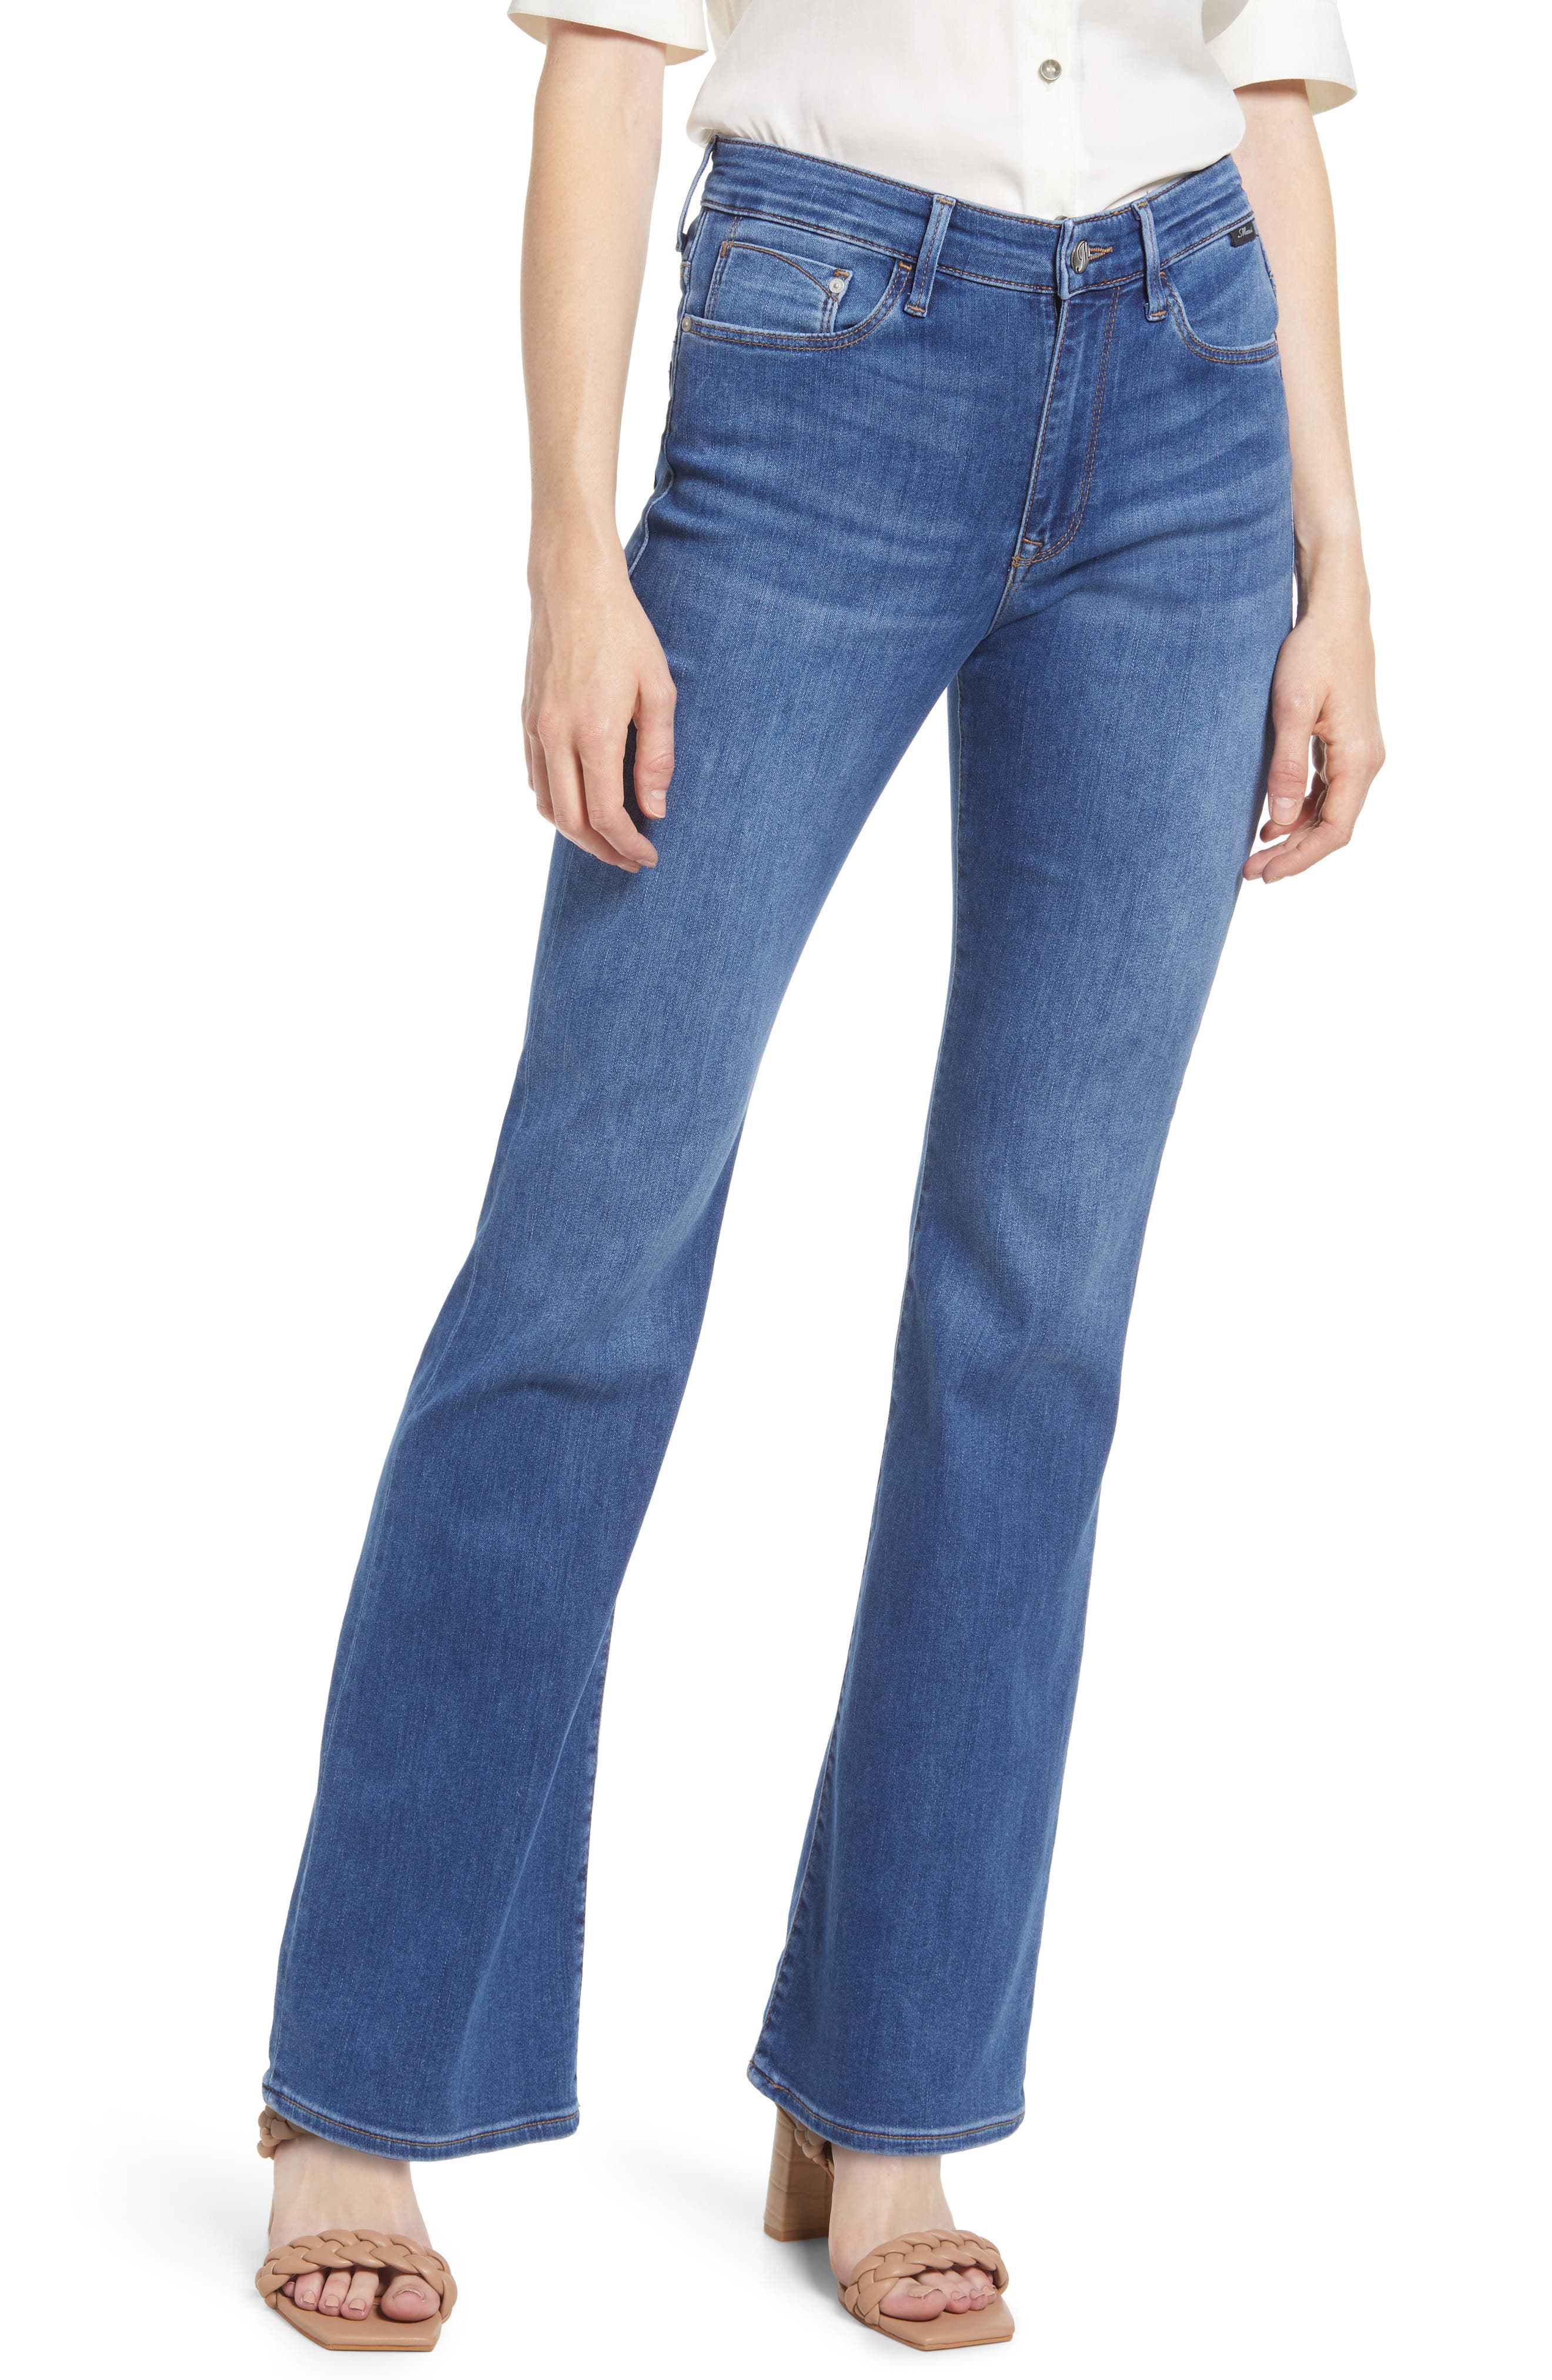 Mavi Jeans Dark Blue Ashley Boot Cut Jean Size 25 NEW $118 JG11 